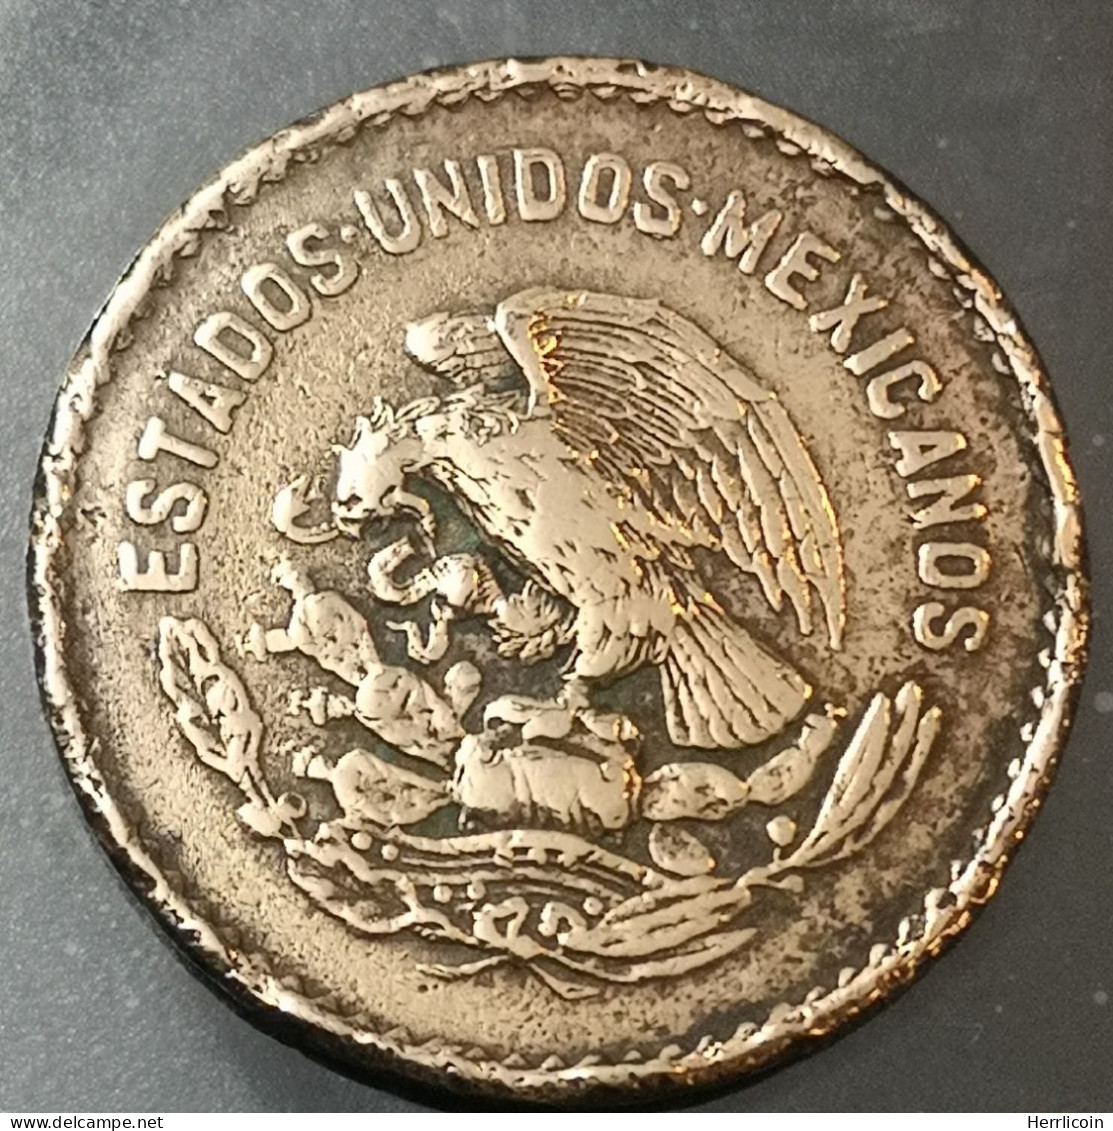 Monnaie Mexique - 1951 - 5 Centavos - Mexico